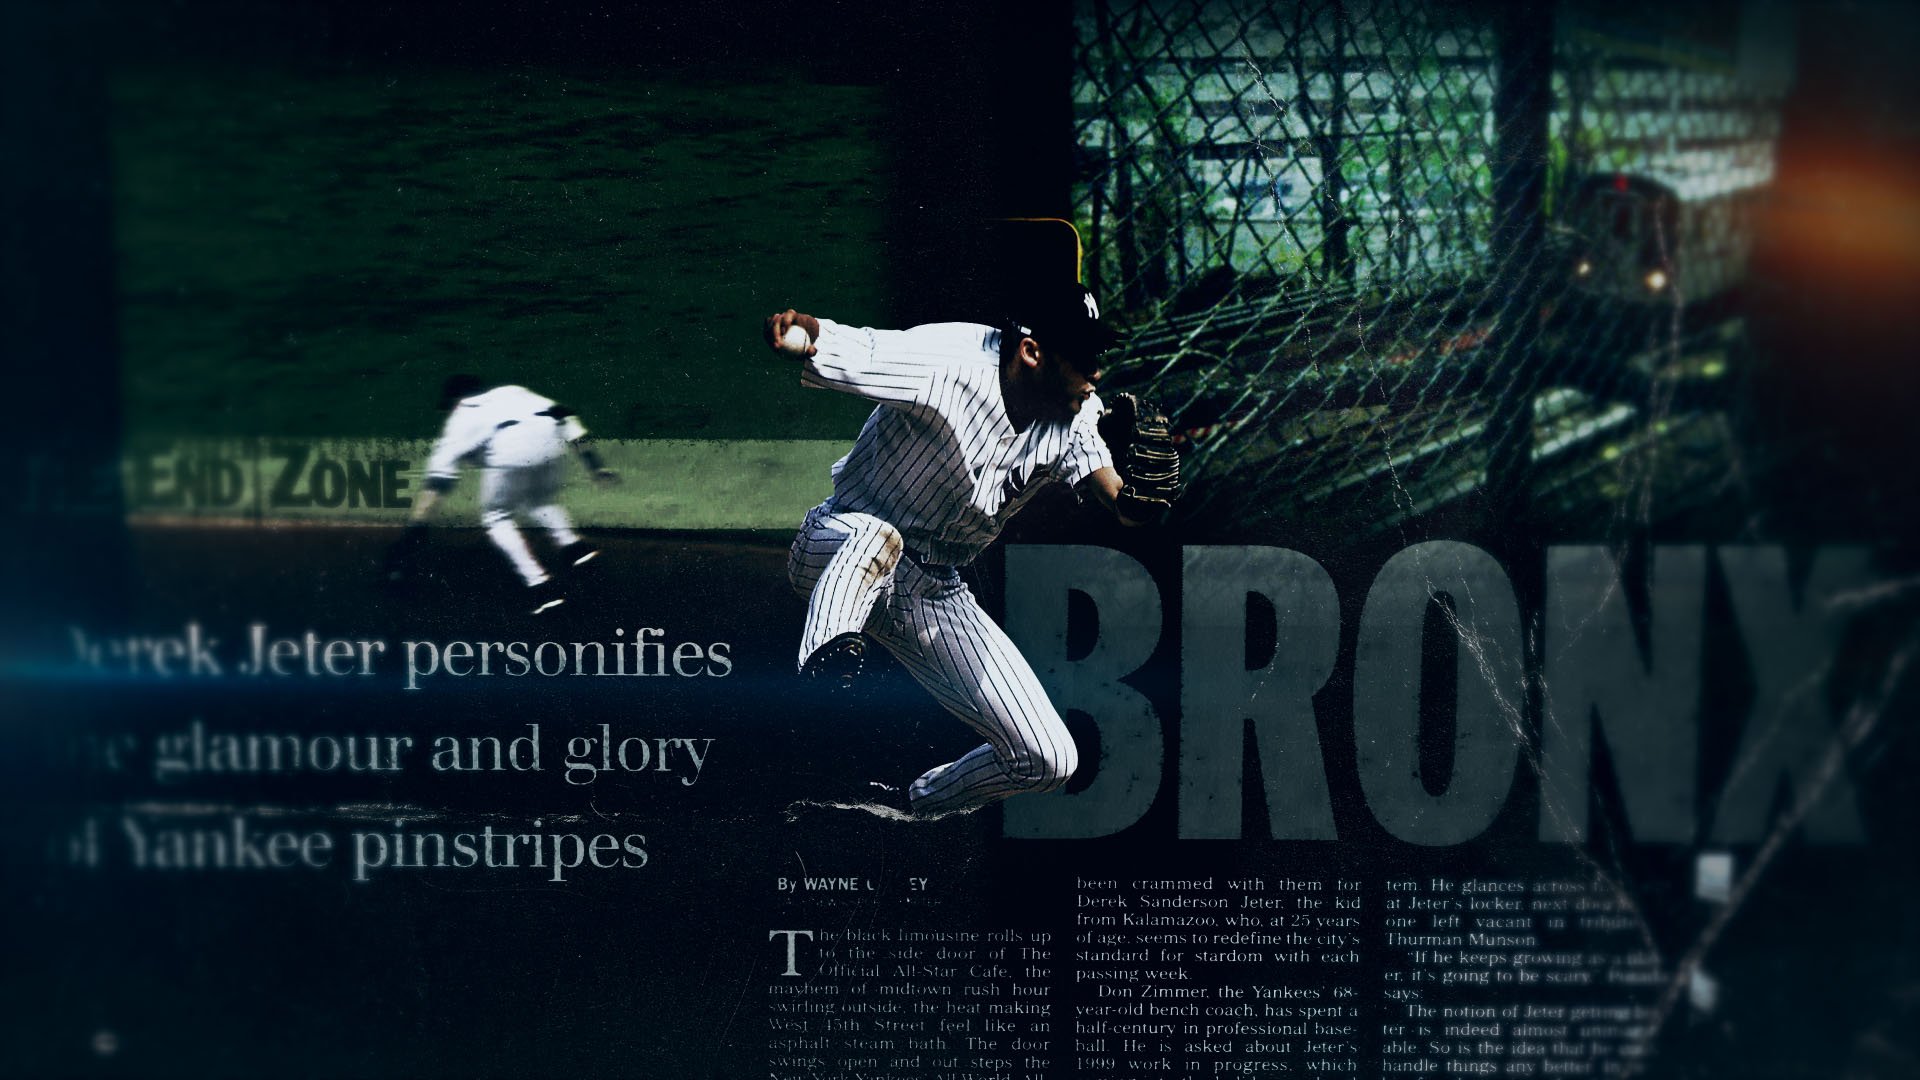 Derek Jeter - Baseball & Sports Background Wallpapers on Desktop